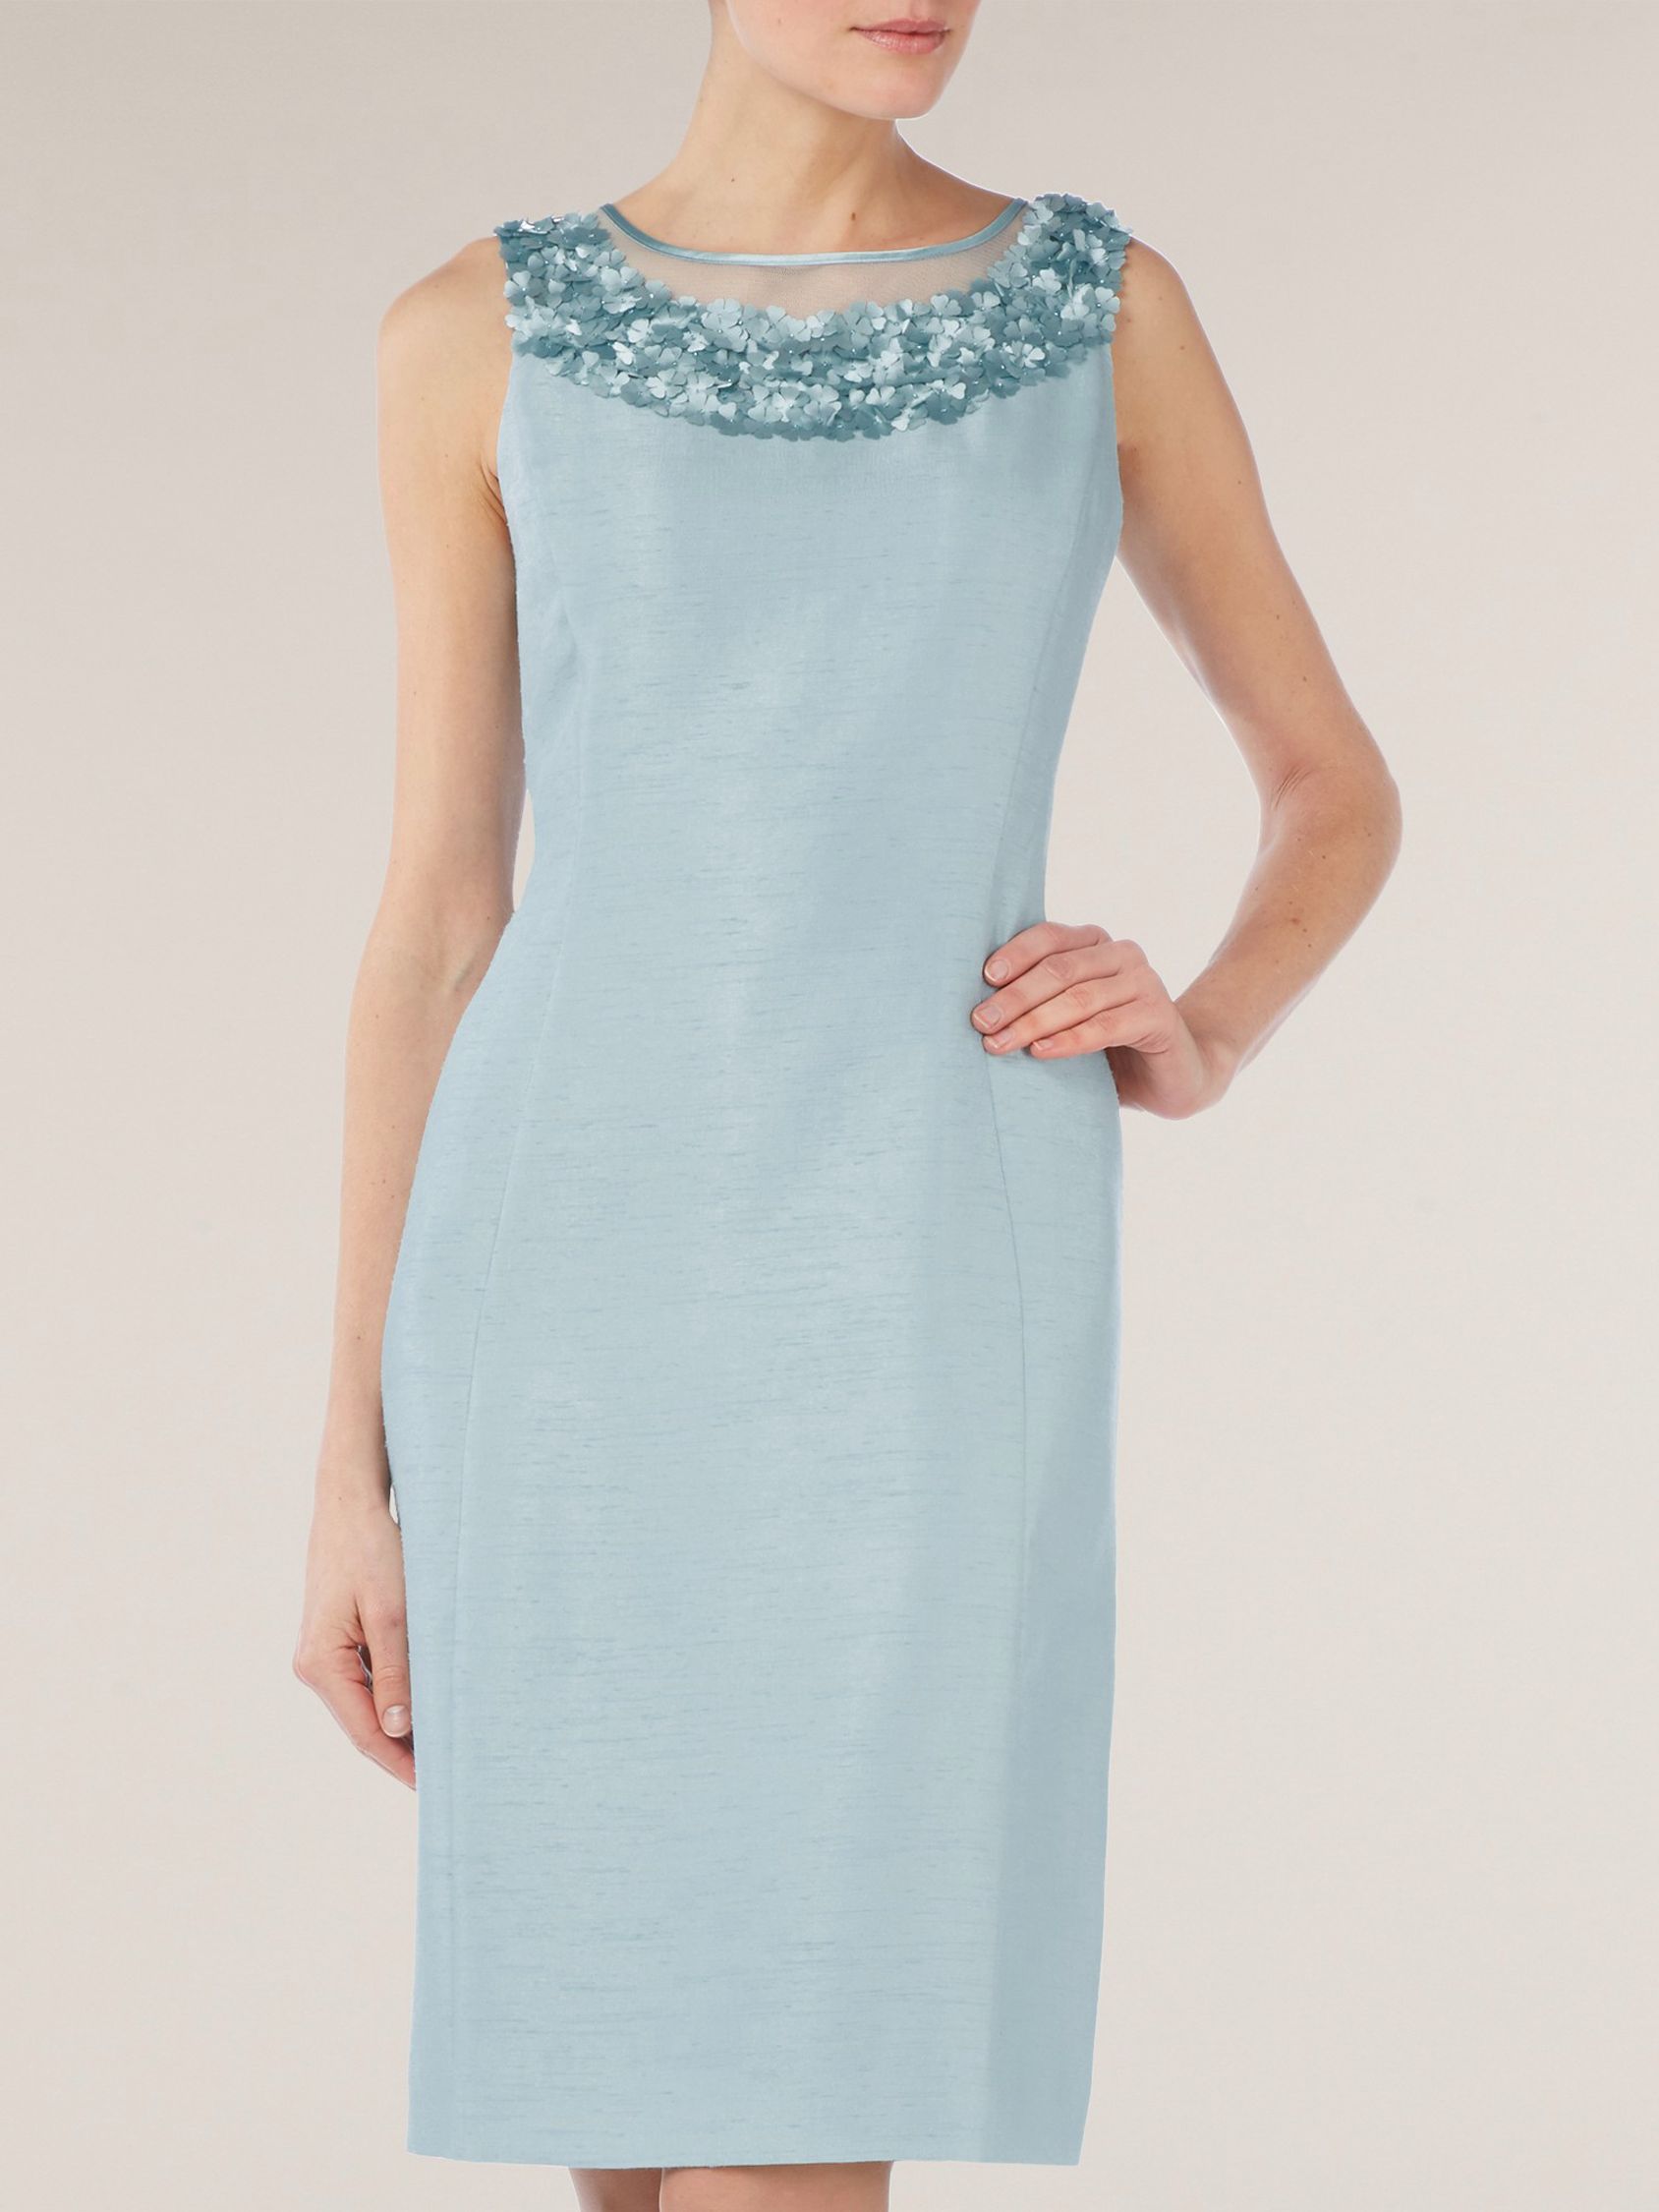 Jacques Vert Floral Detail Shift Dress, Blue at John Lewis & Partners